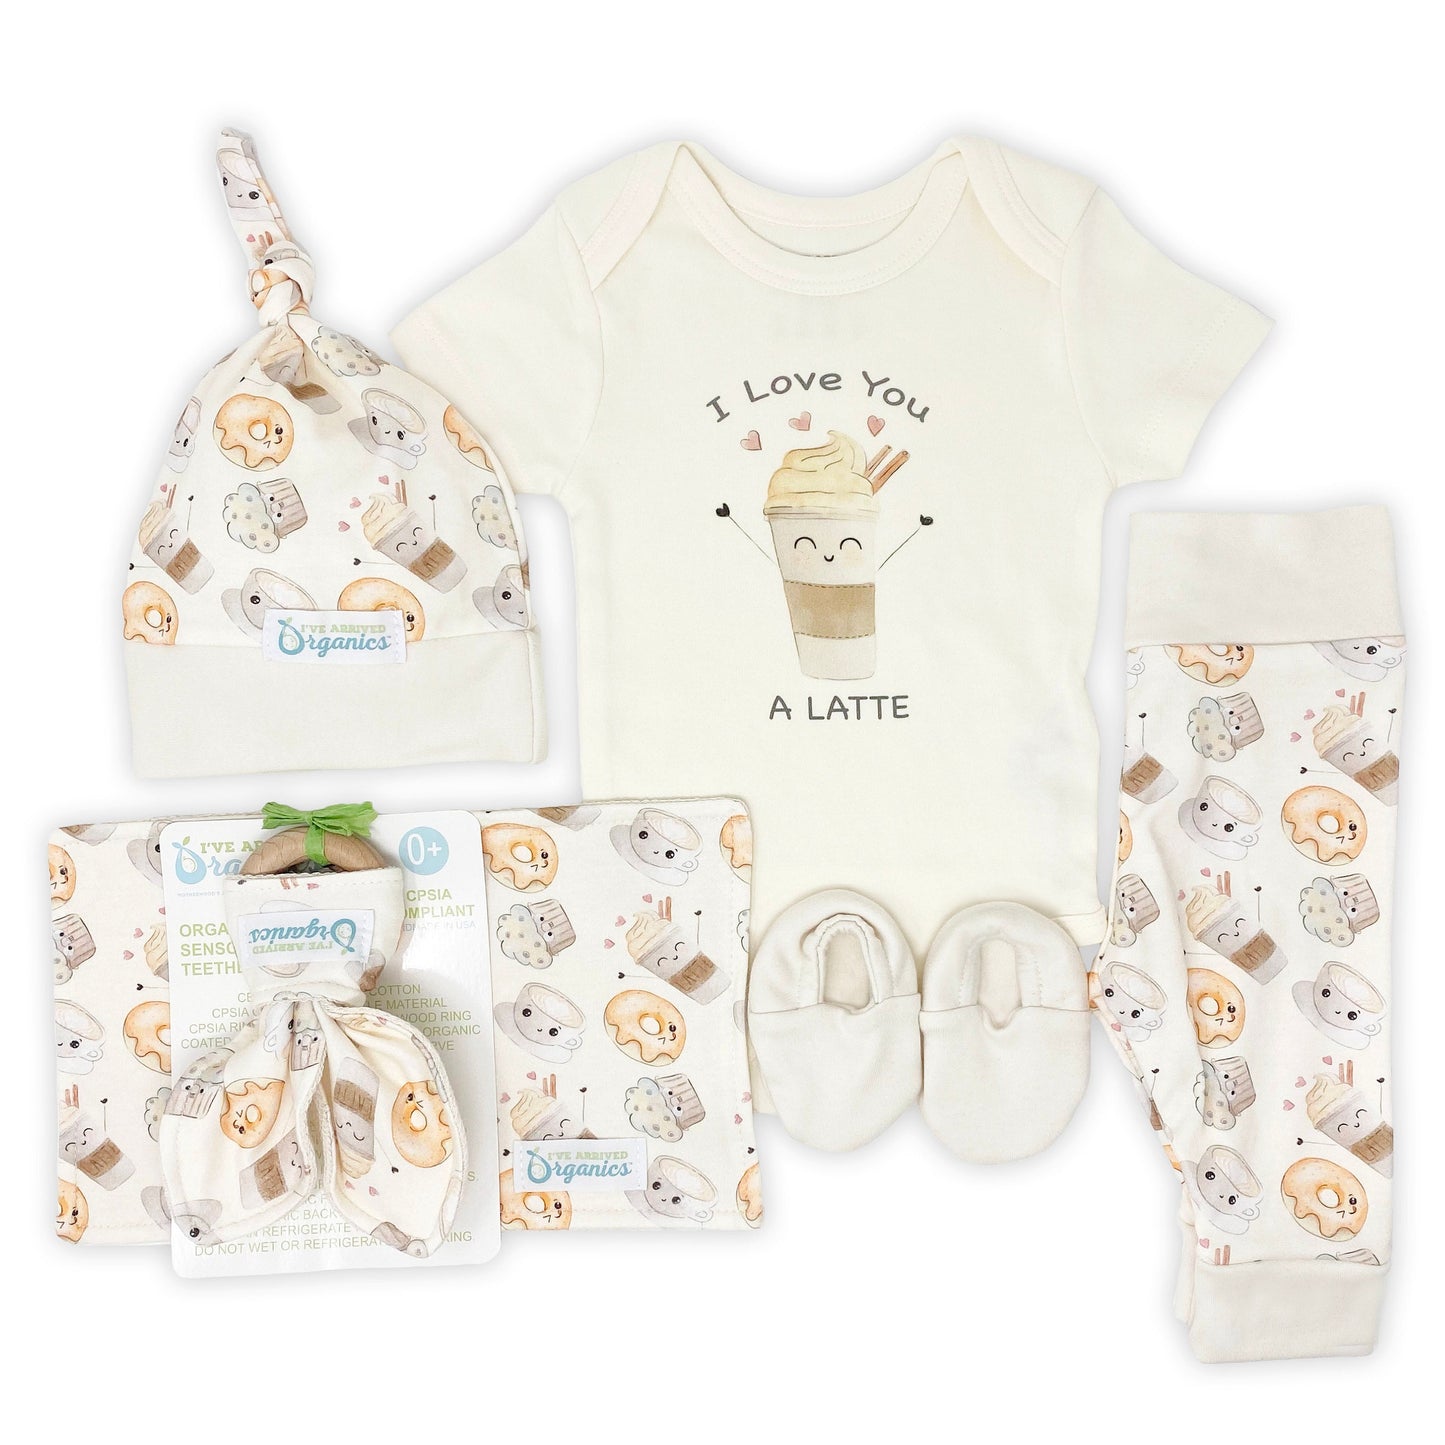 Personalized Latte Gender Neutral Baby Gift Basket